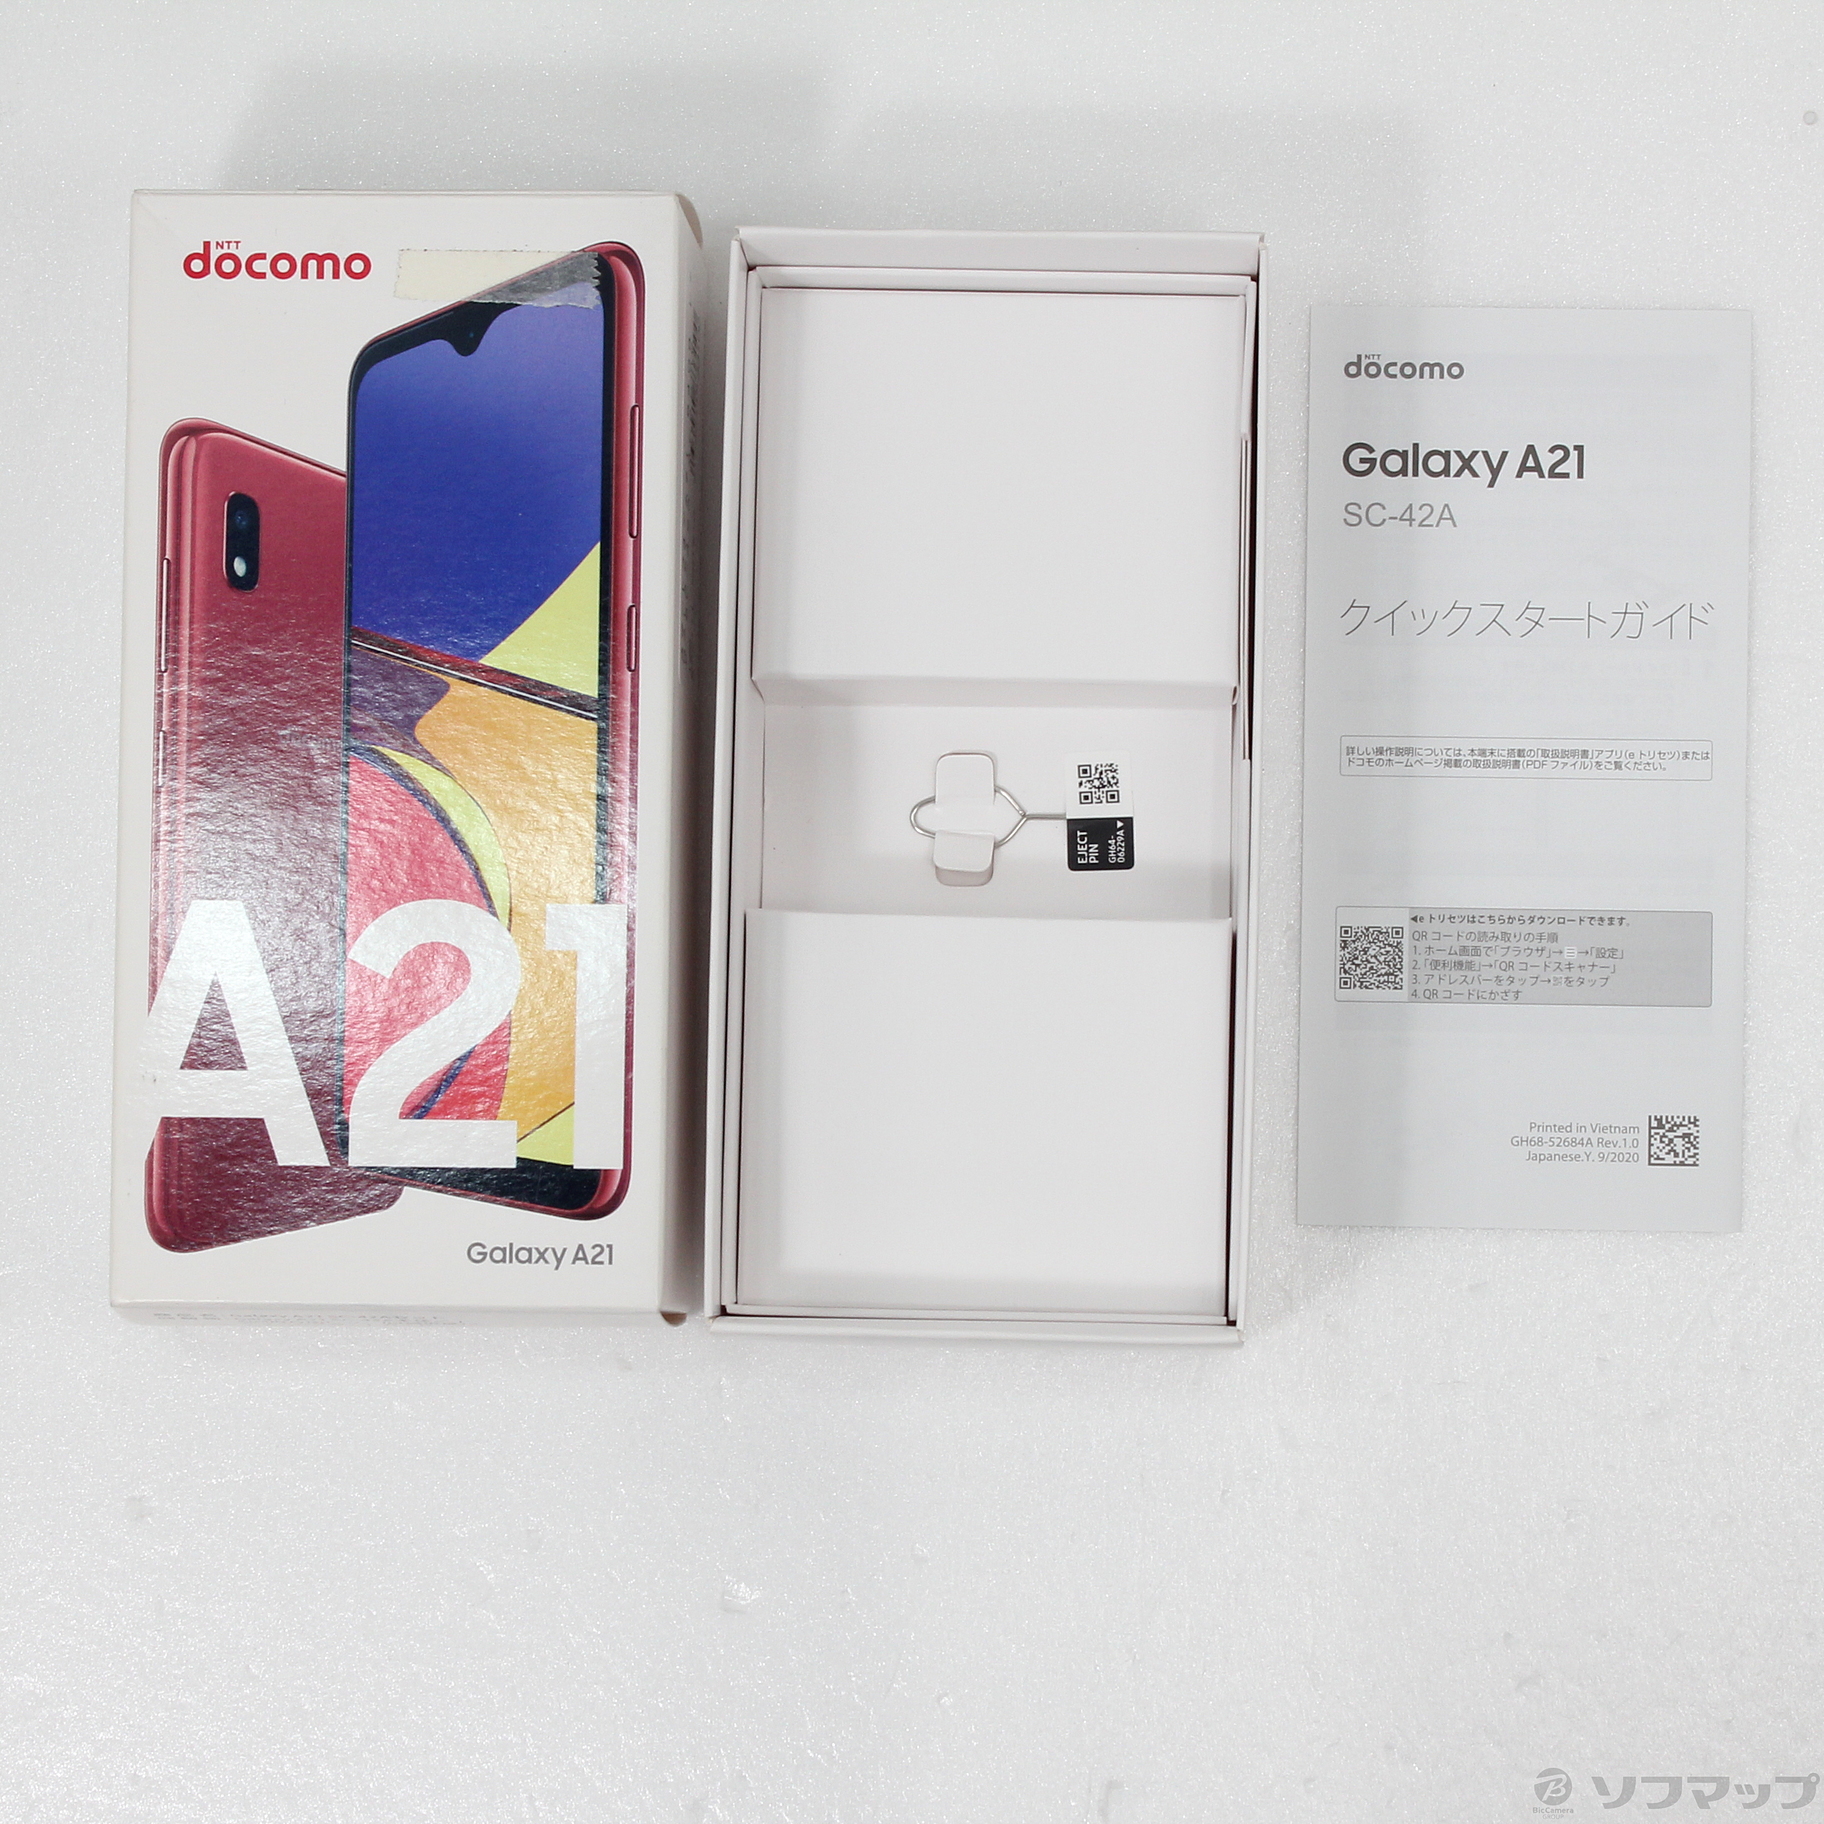 Galaxy A21 SC-42A 5.8液晶 3GB 64GB レッド ドコモ-